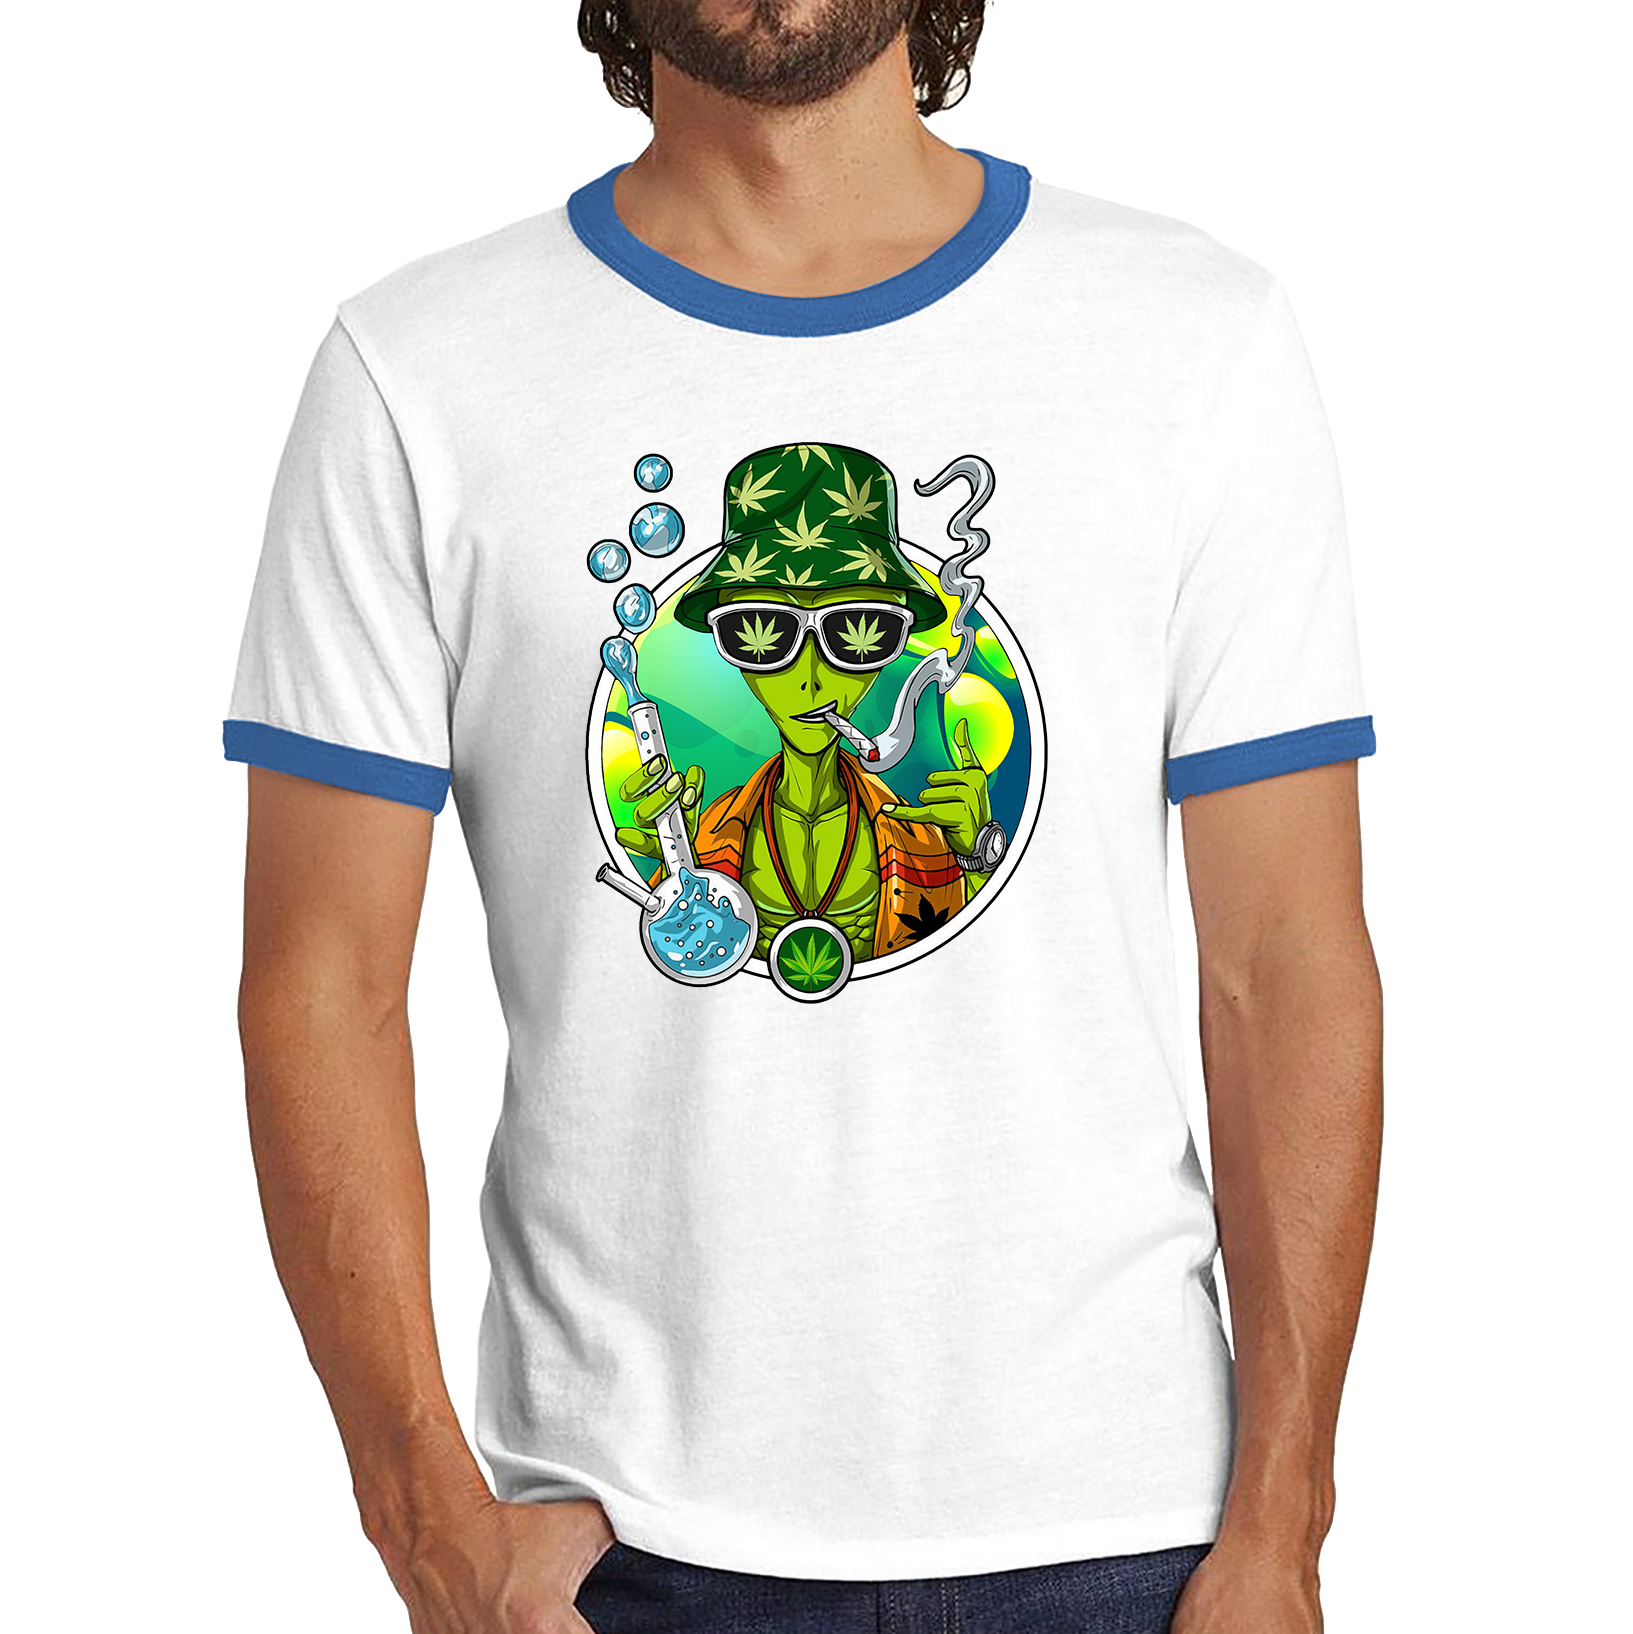 Weed Alien Stoner Shirt Marijuana, Cannabis Lovers Funny Joke Ringer T Shirt